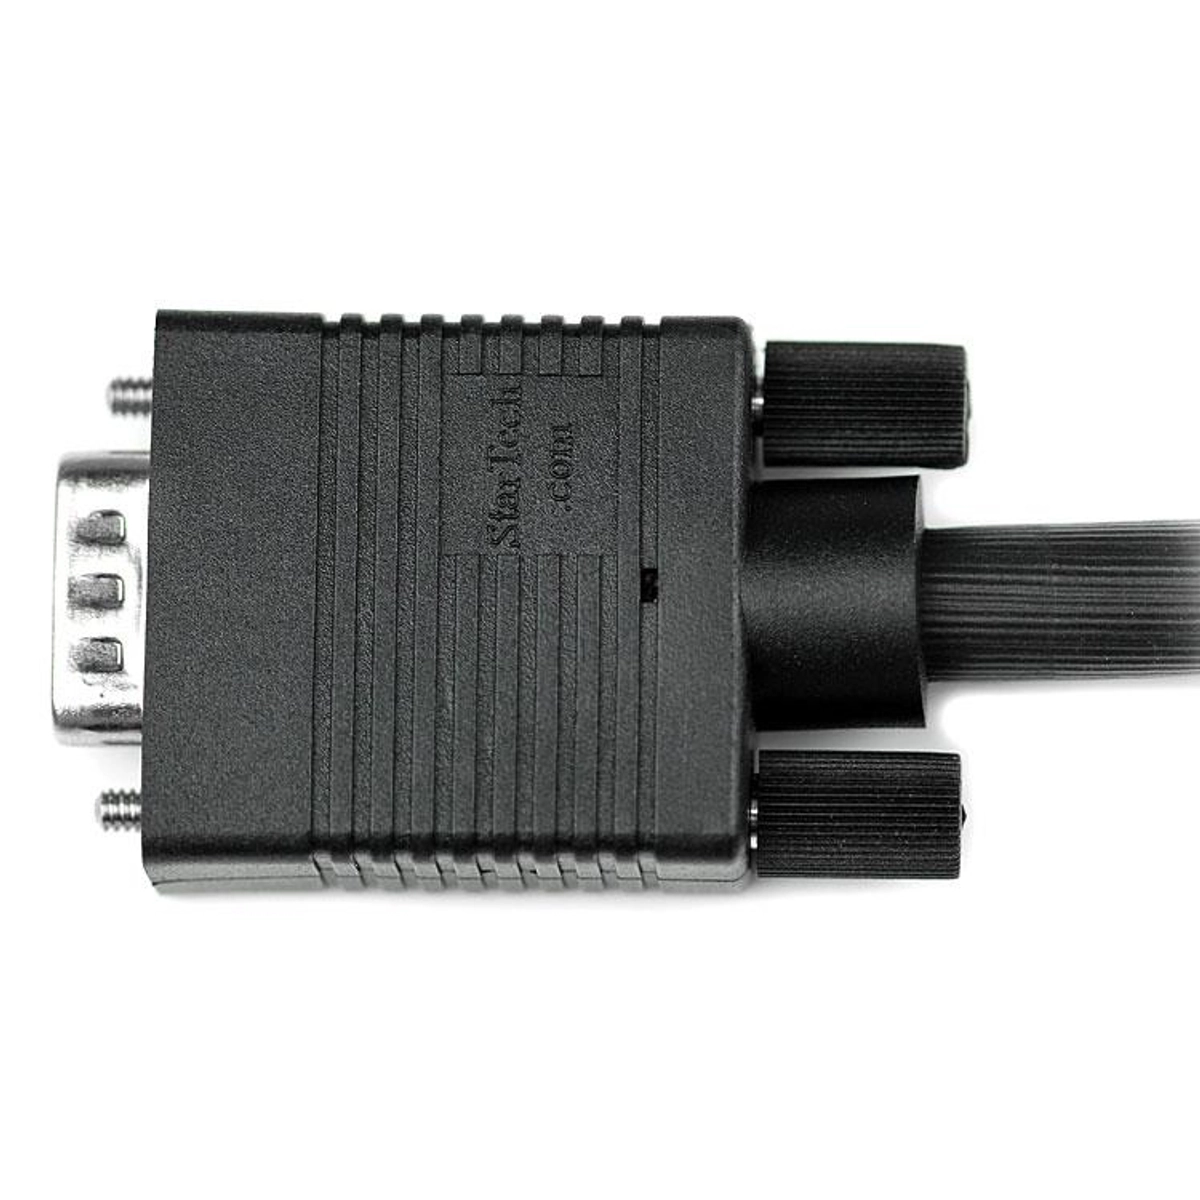 1m Coax High Res Monitor VGA Cable